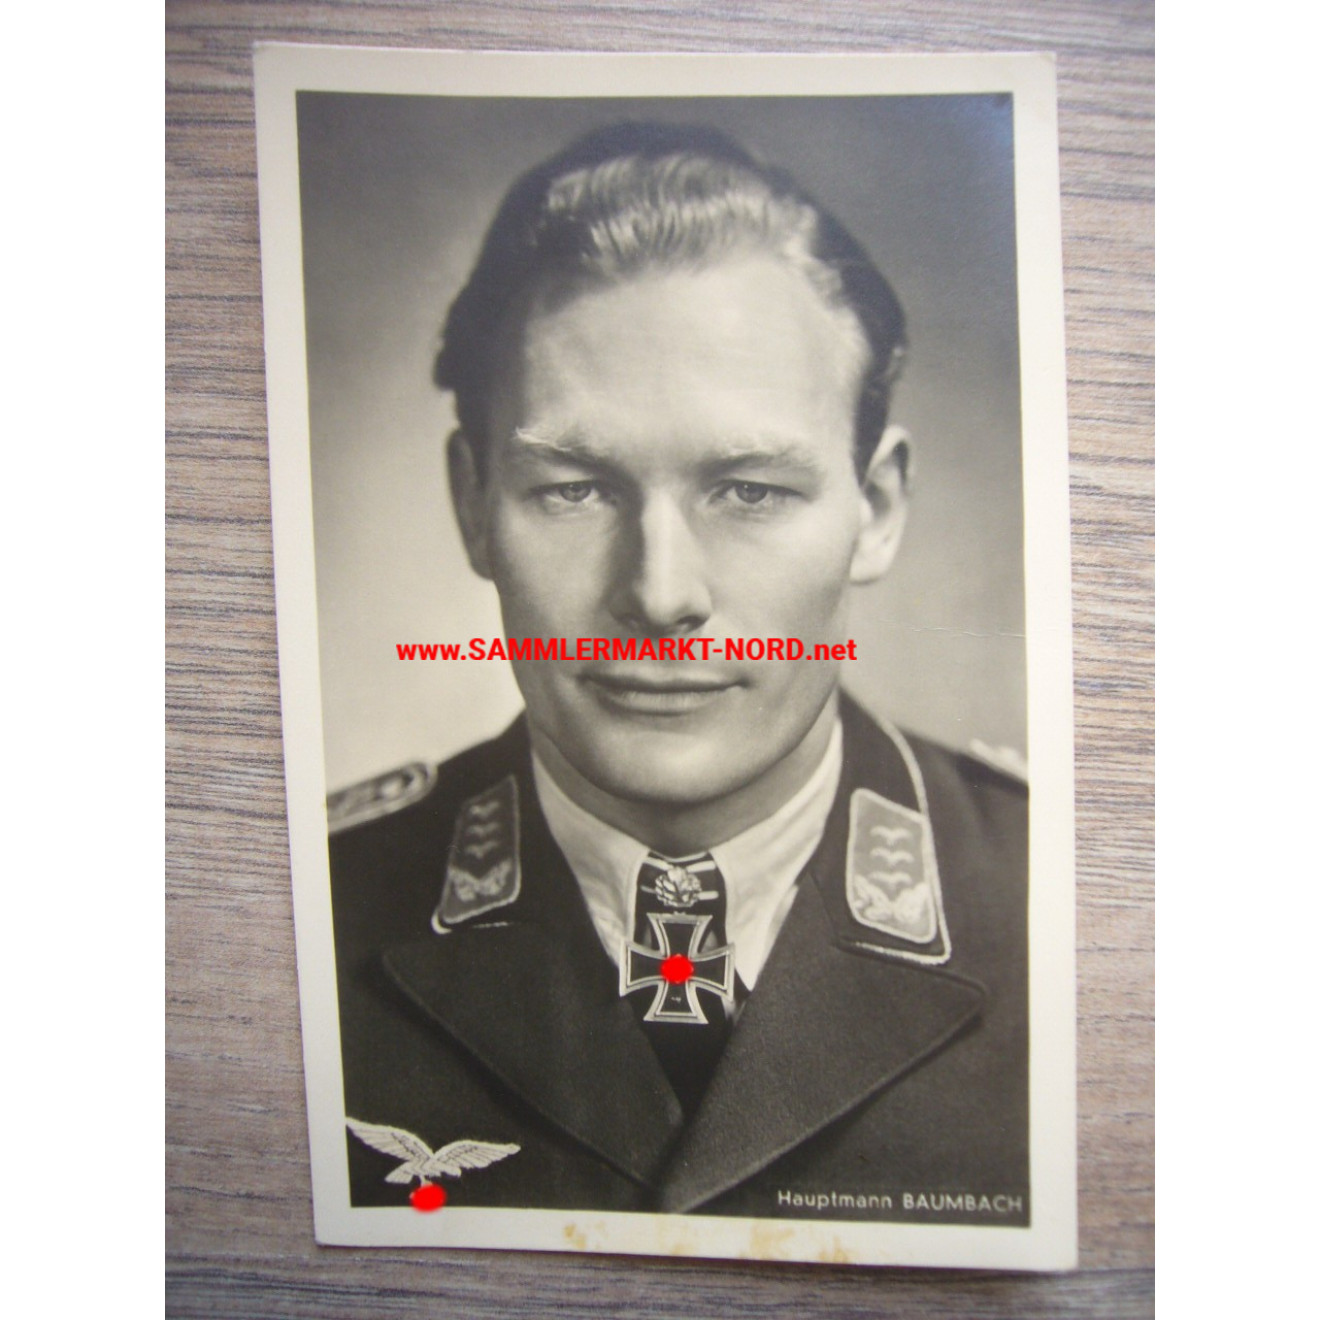 Captain Werner Baumbach (oak leaves) - Hoffmann postcard